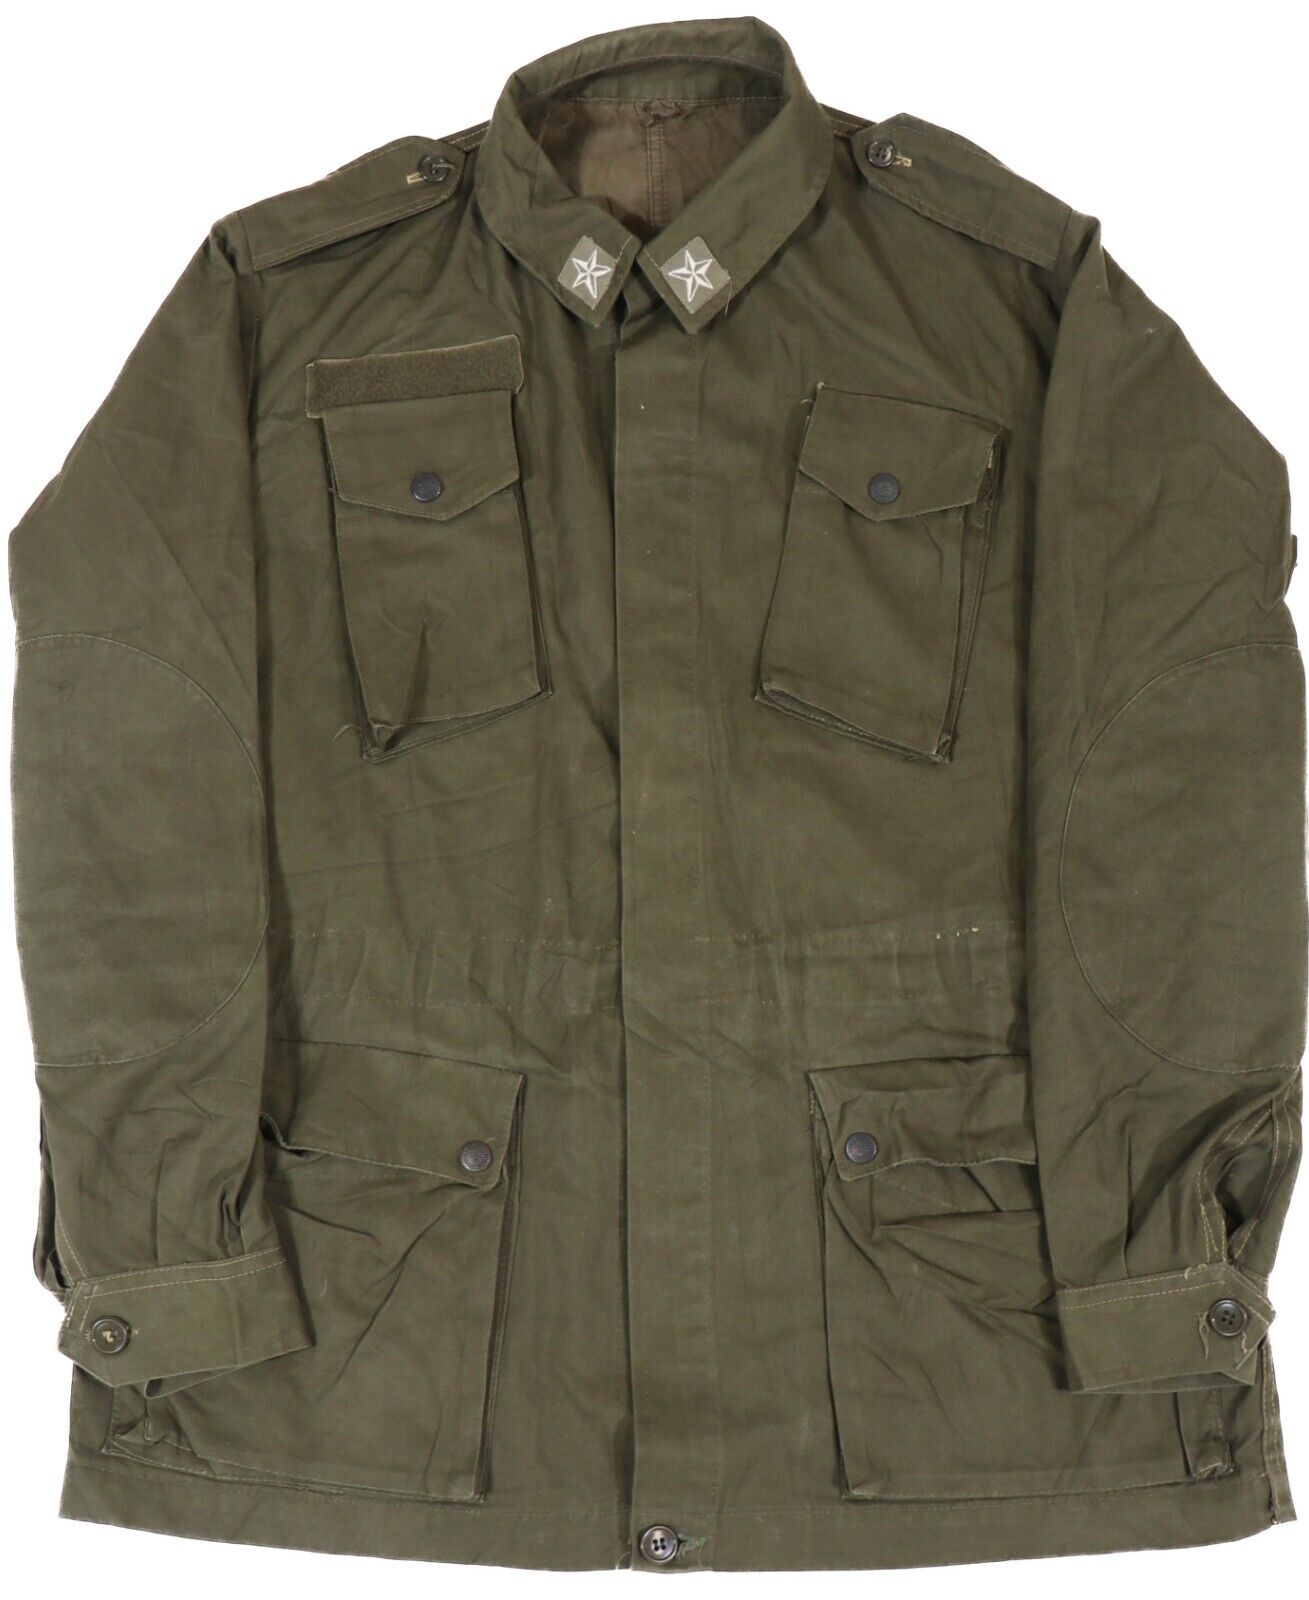 Medium Authentic Italian Army OD Green Combat Field Jacket Shirt Parka Military